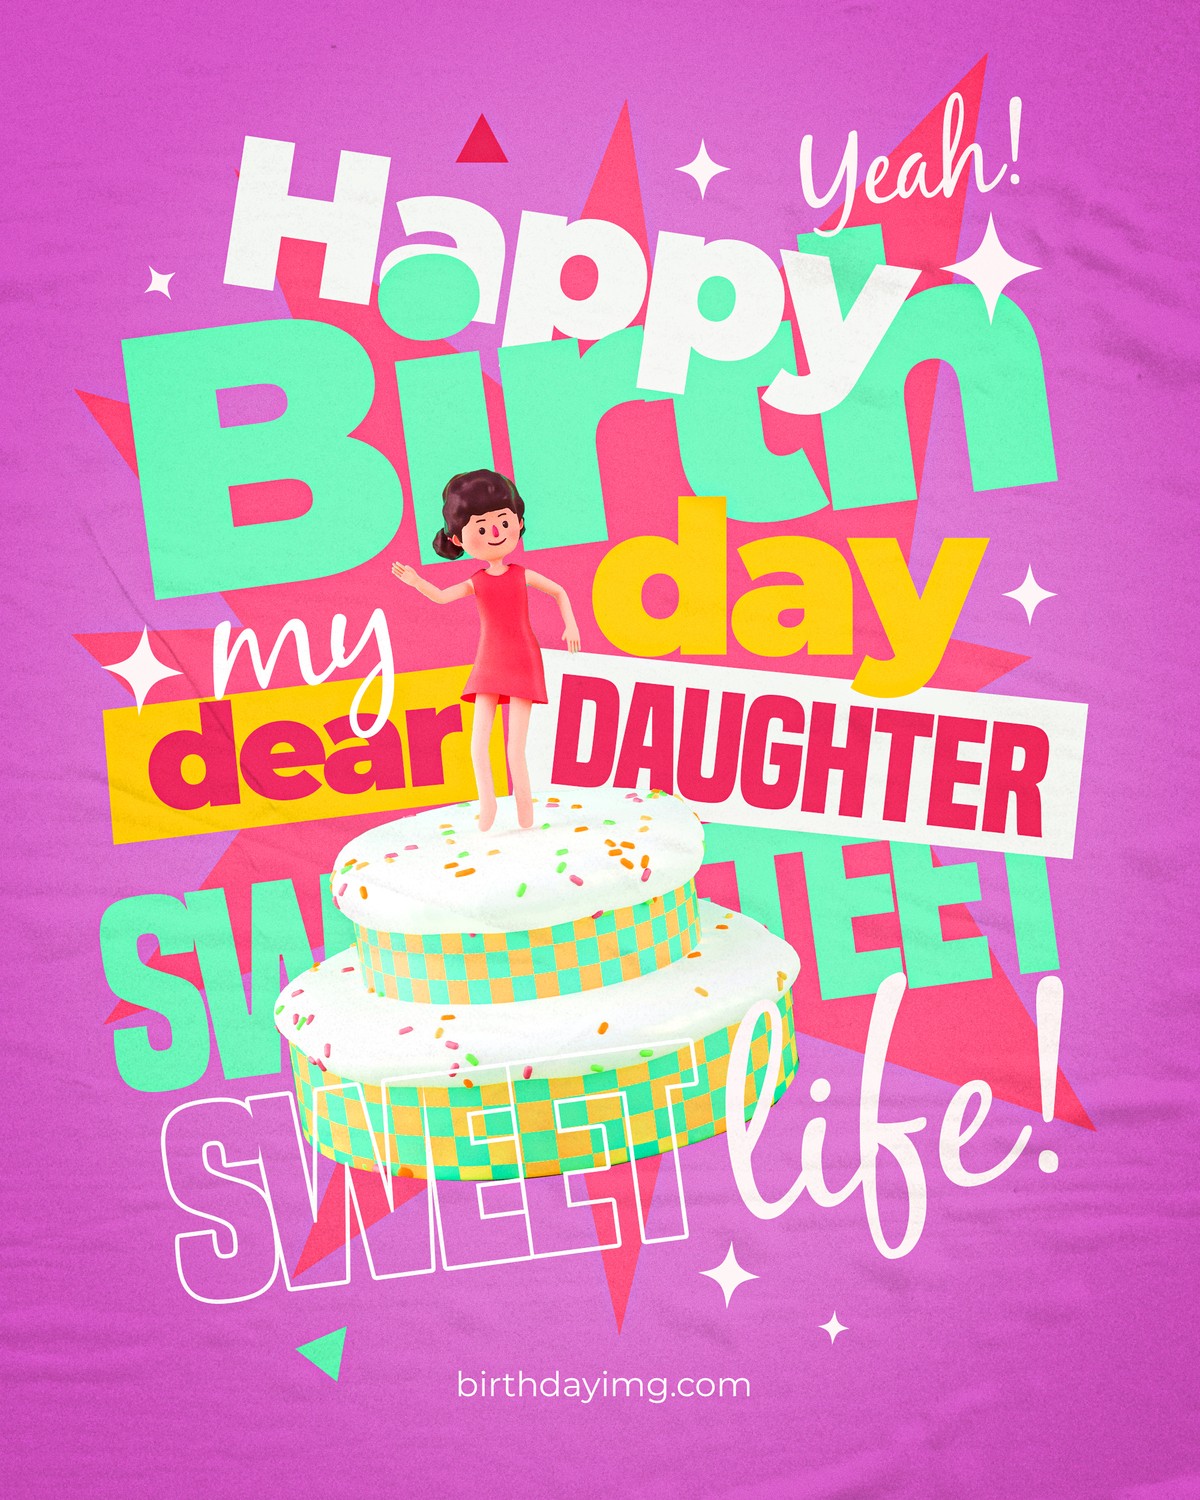 Free Happy Birthday Image for Daughter - birthdayimg.com